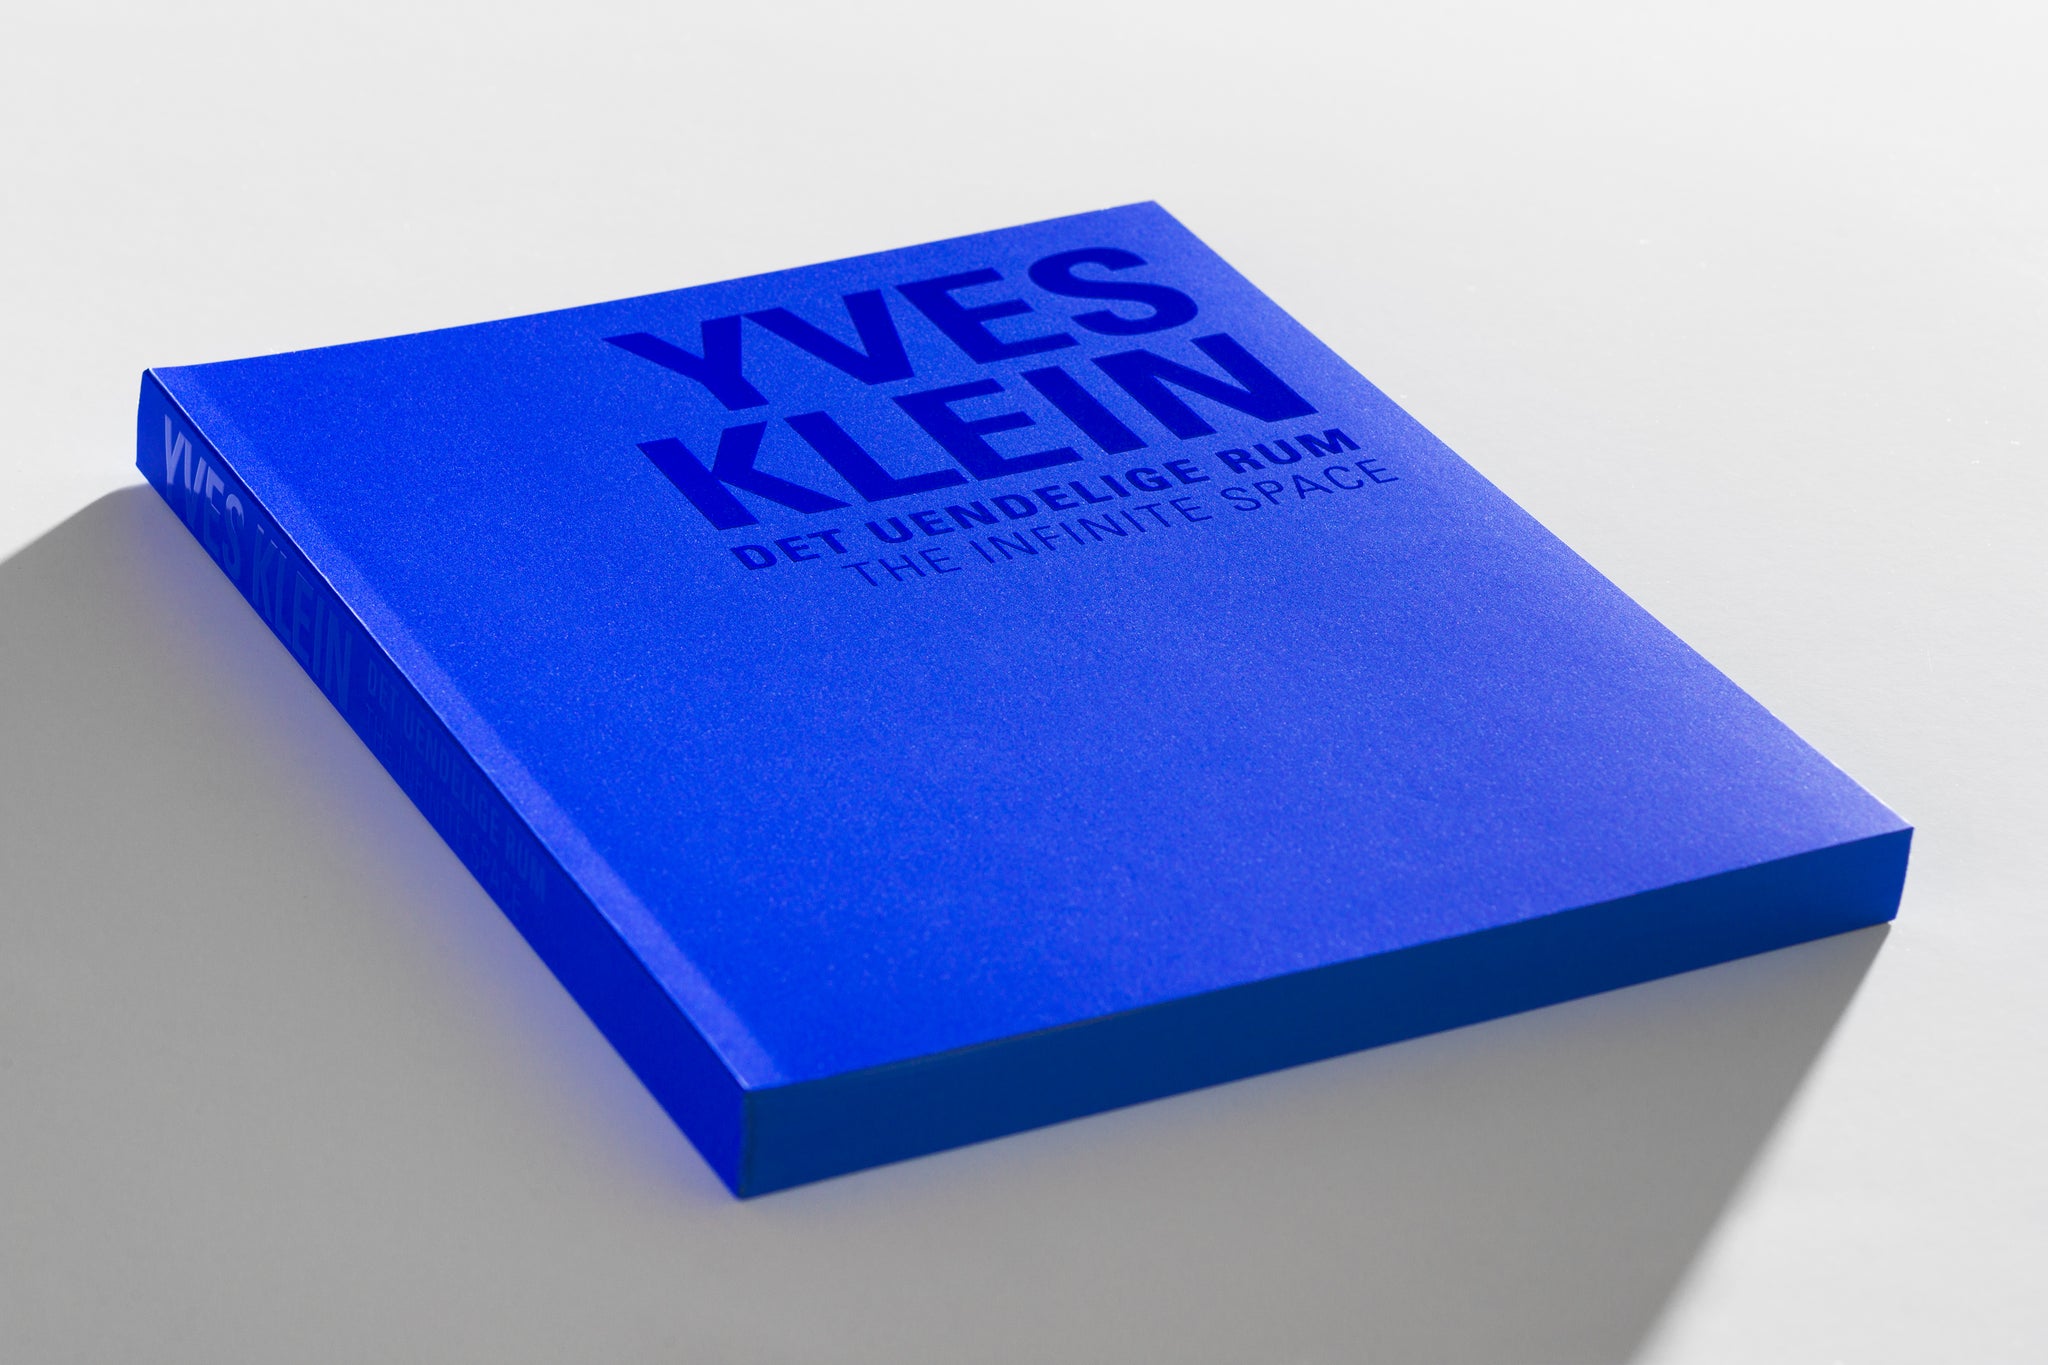 Yves Klein bog : det uendelige rum